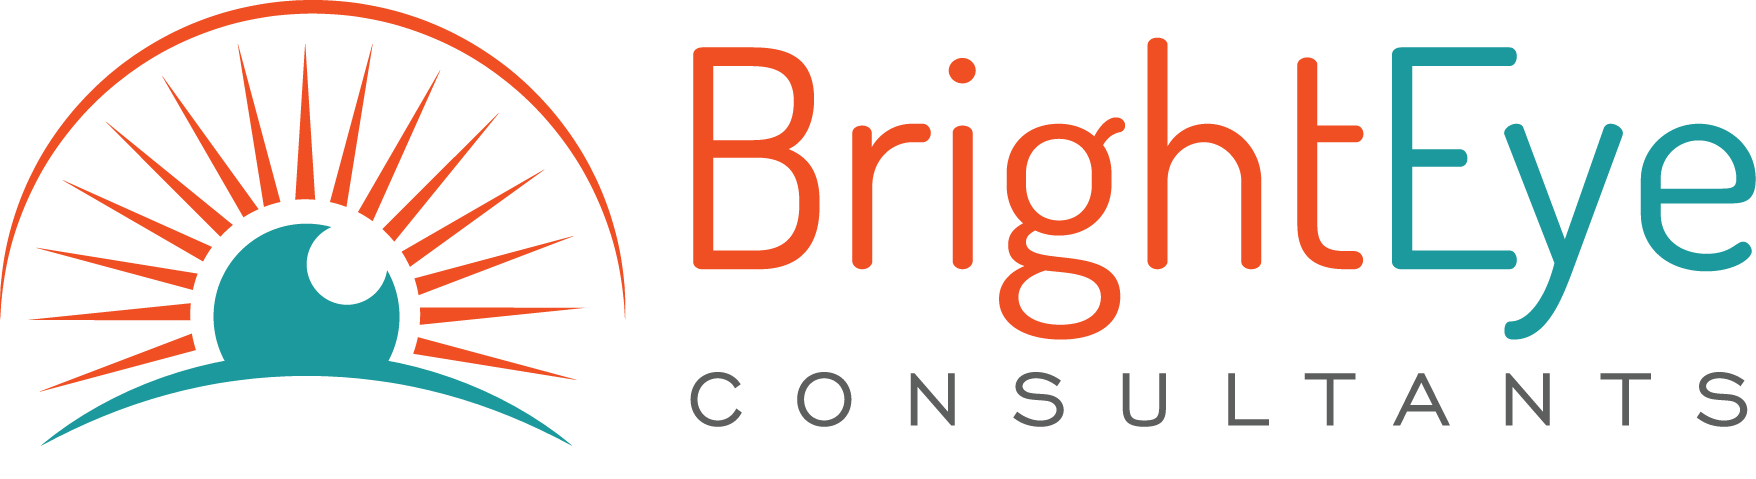 Bright Eye Consultants